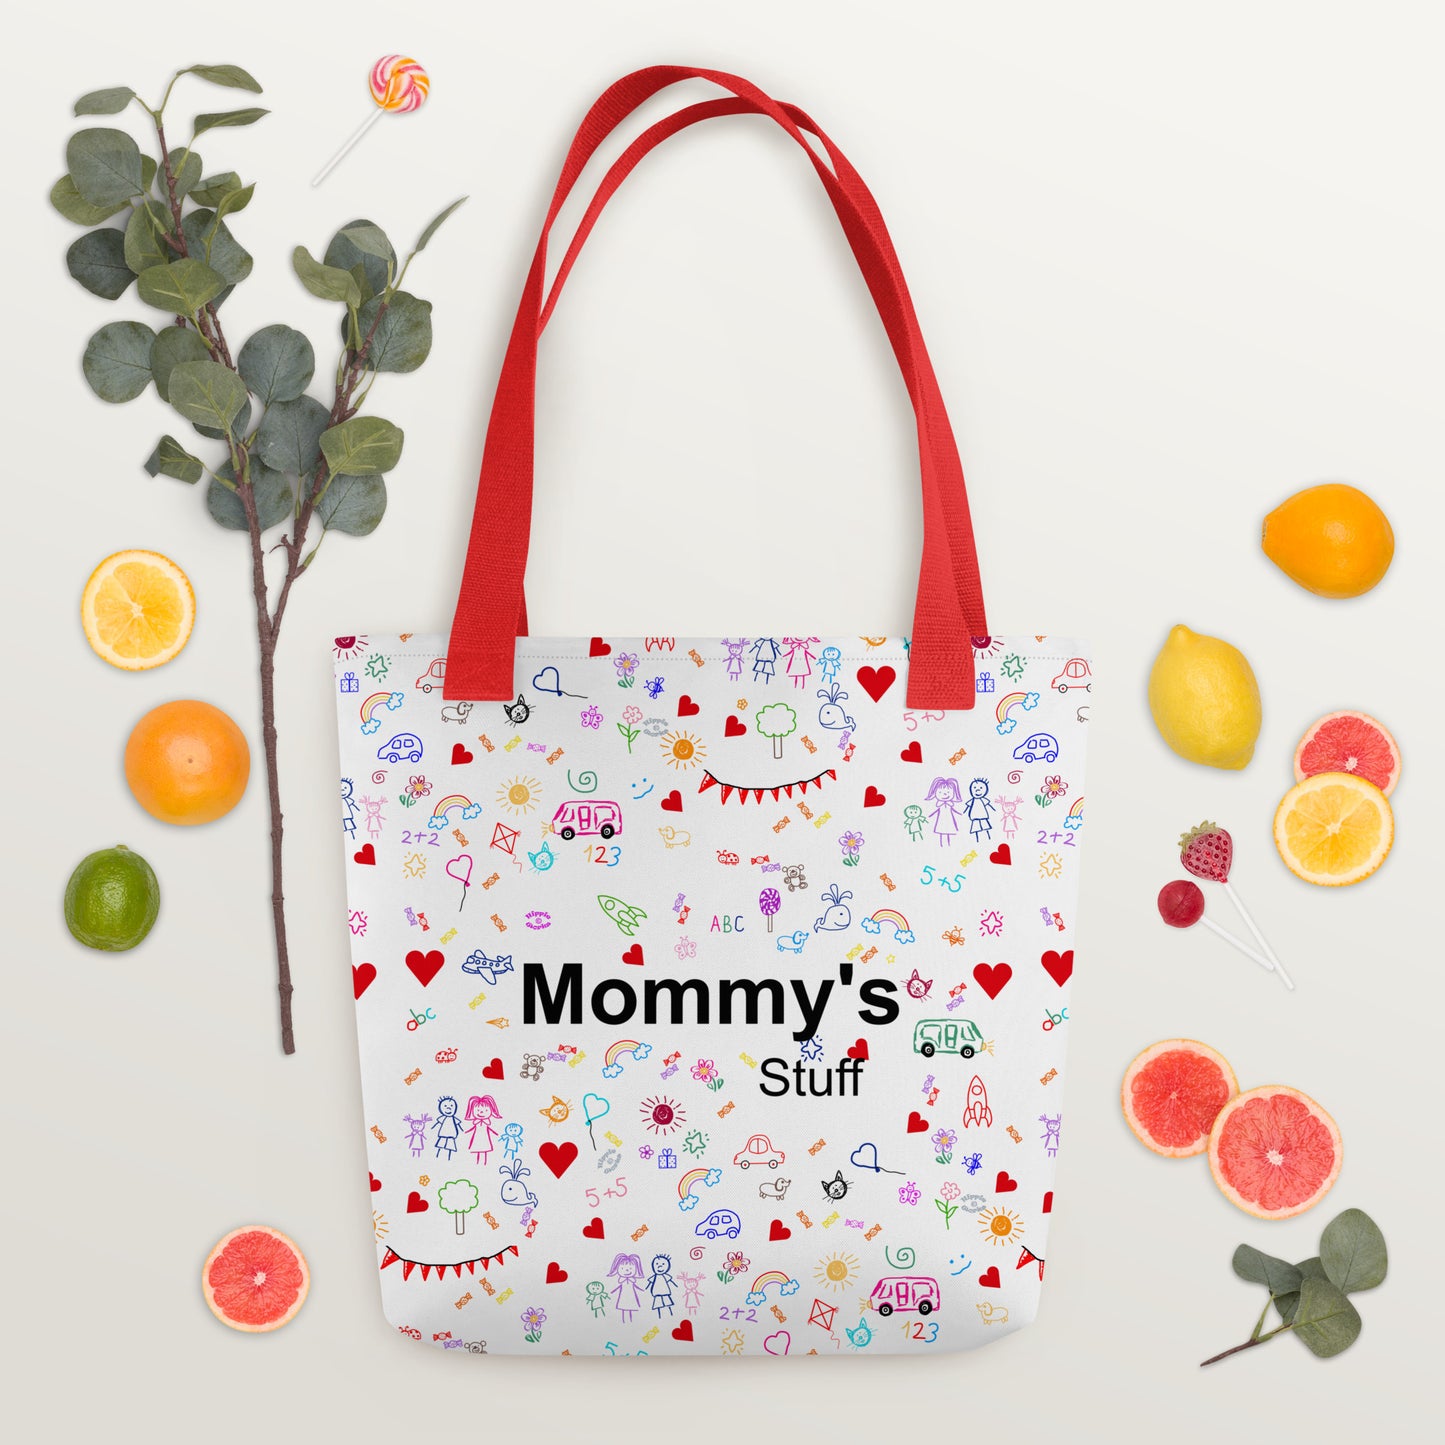 "Mommy's Stuff" Tote bag